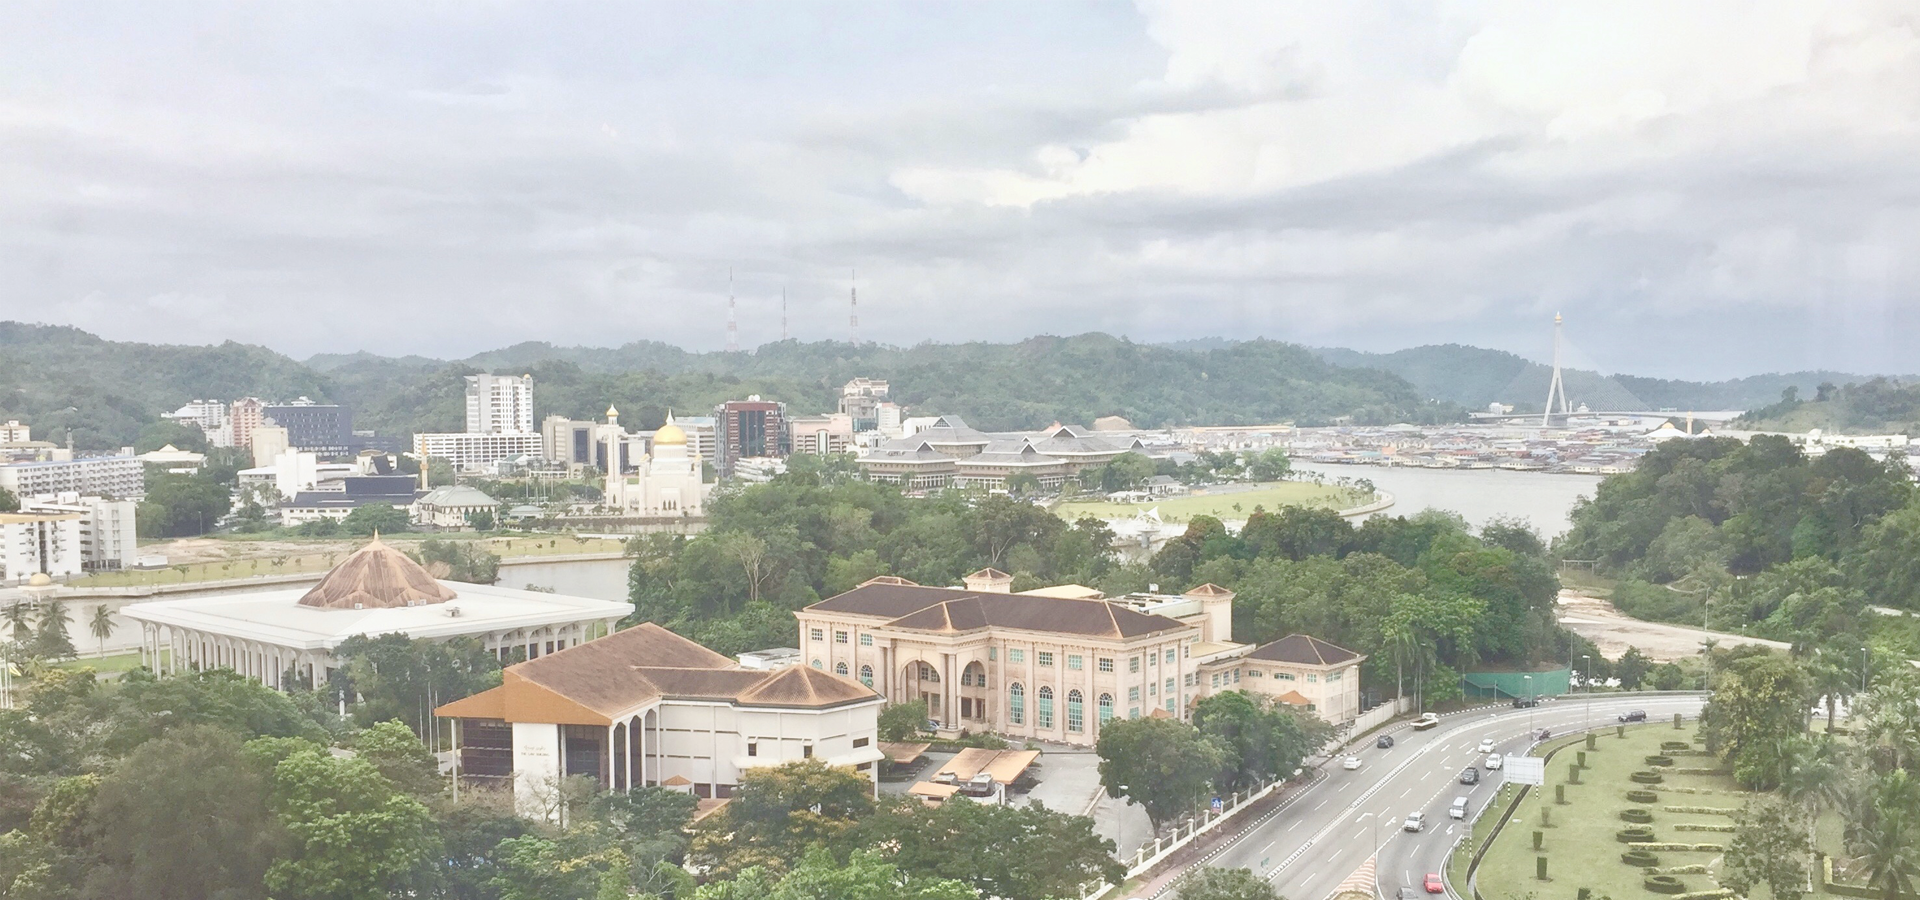 <b>Bandar Seri Begawan, Brunei and Muara District, Brunei</b>